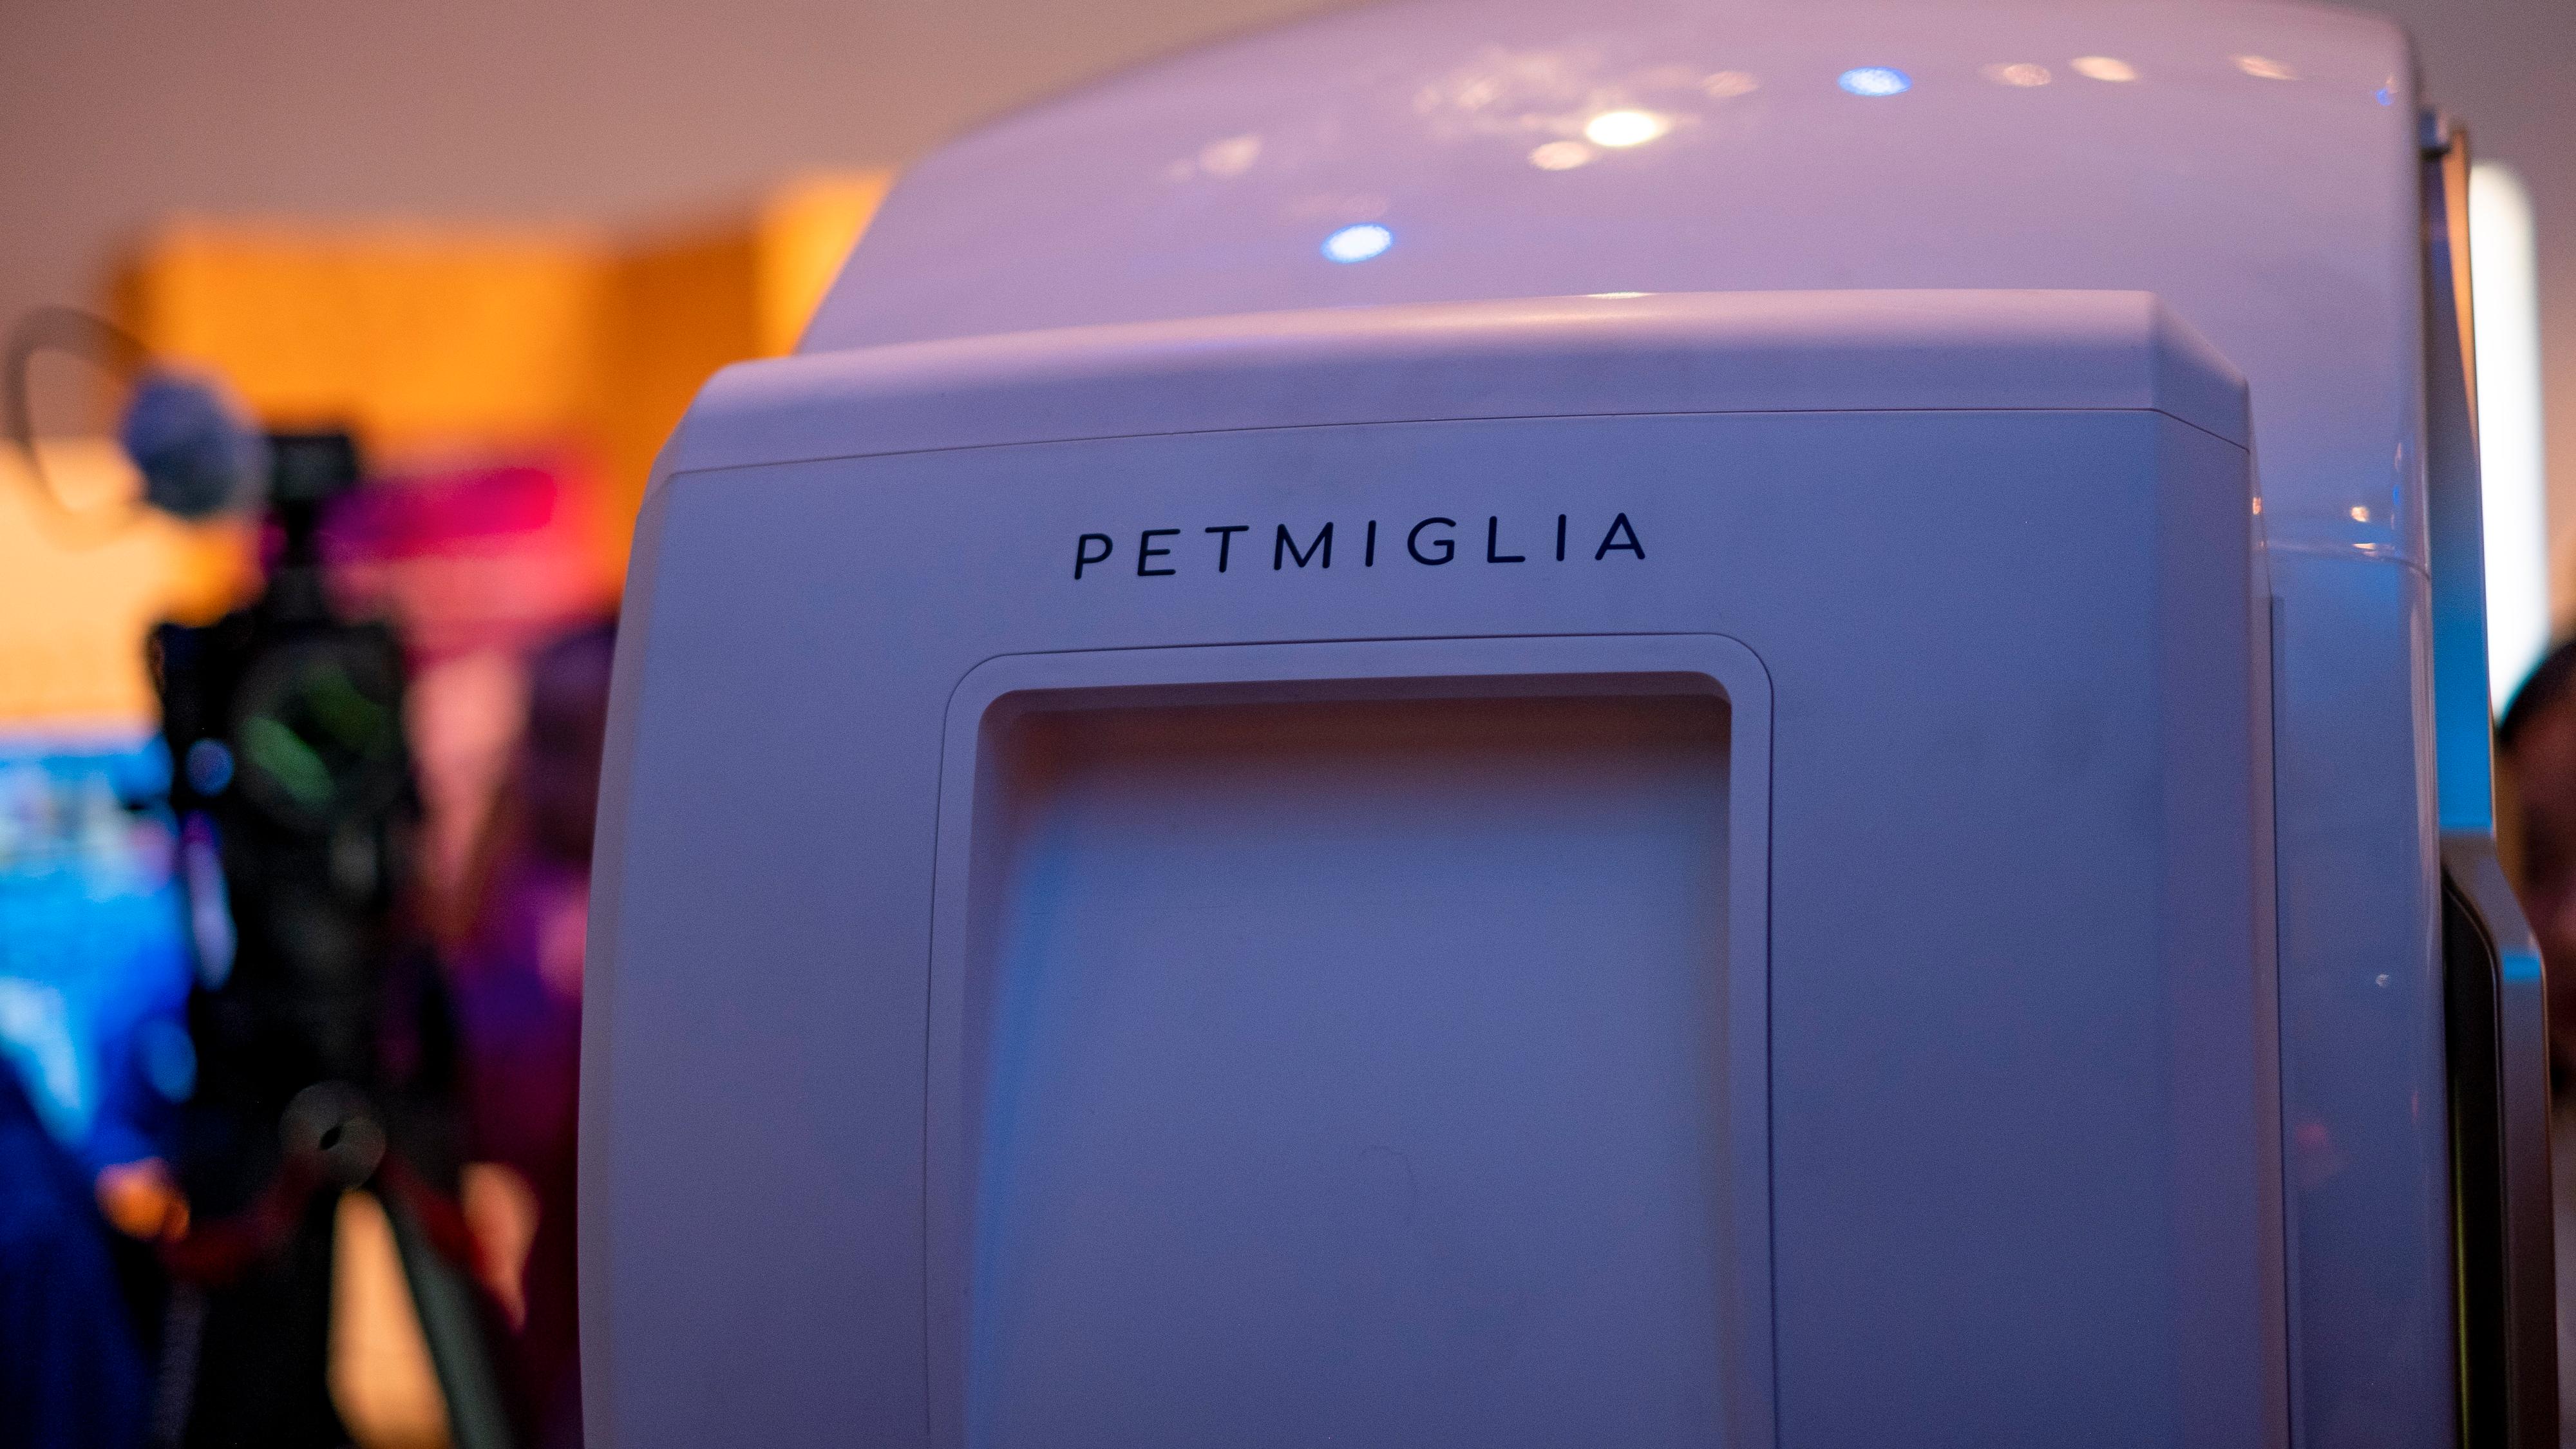 «Pet» og «famiglia» er satt sammen til «Petmiglia».